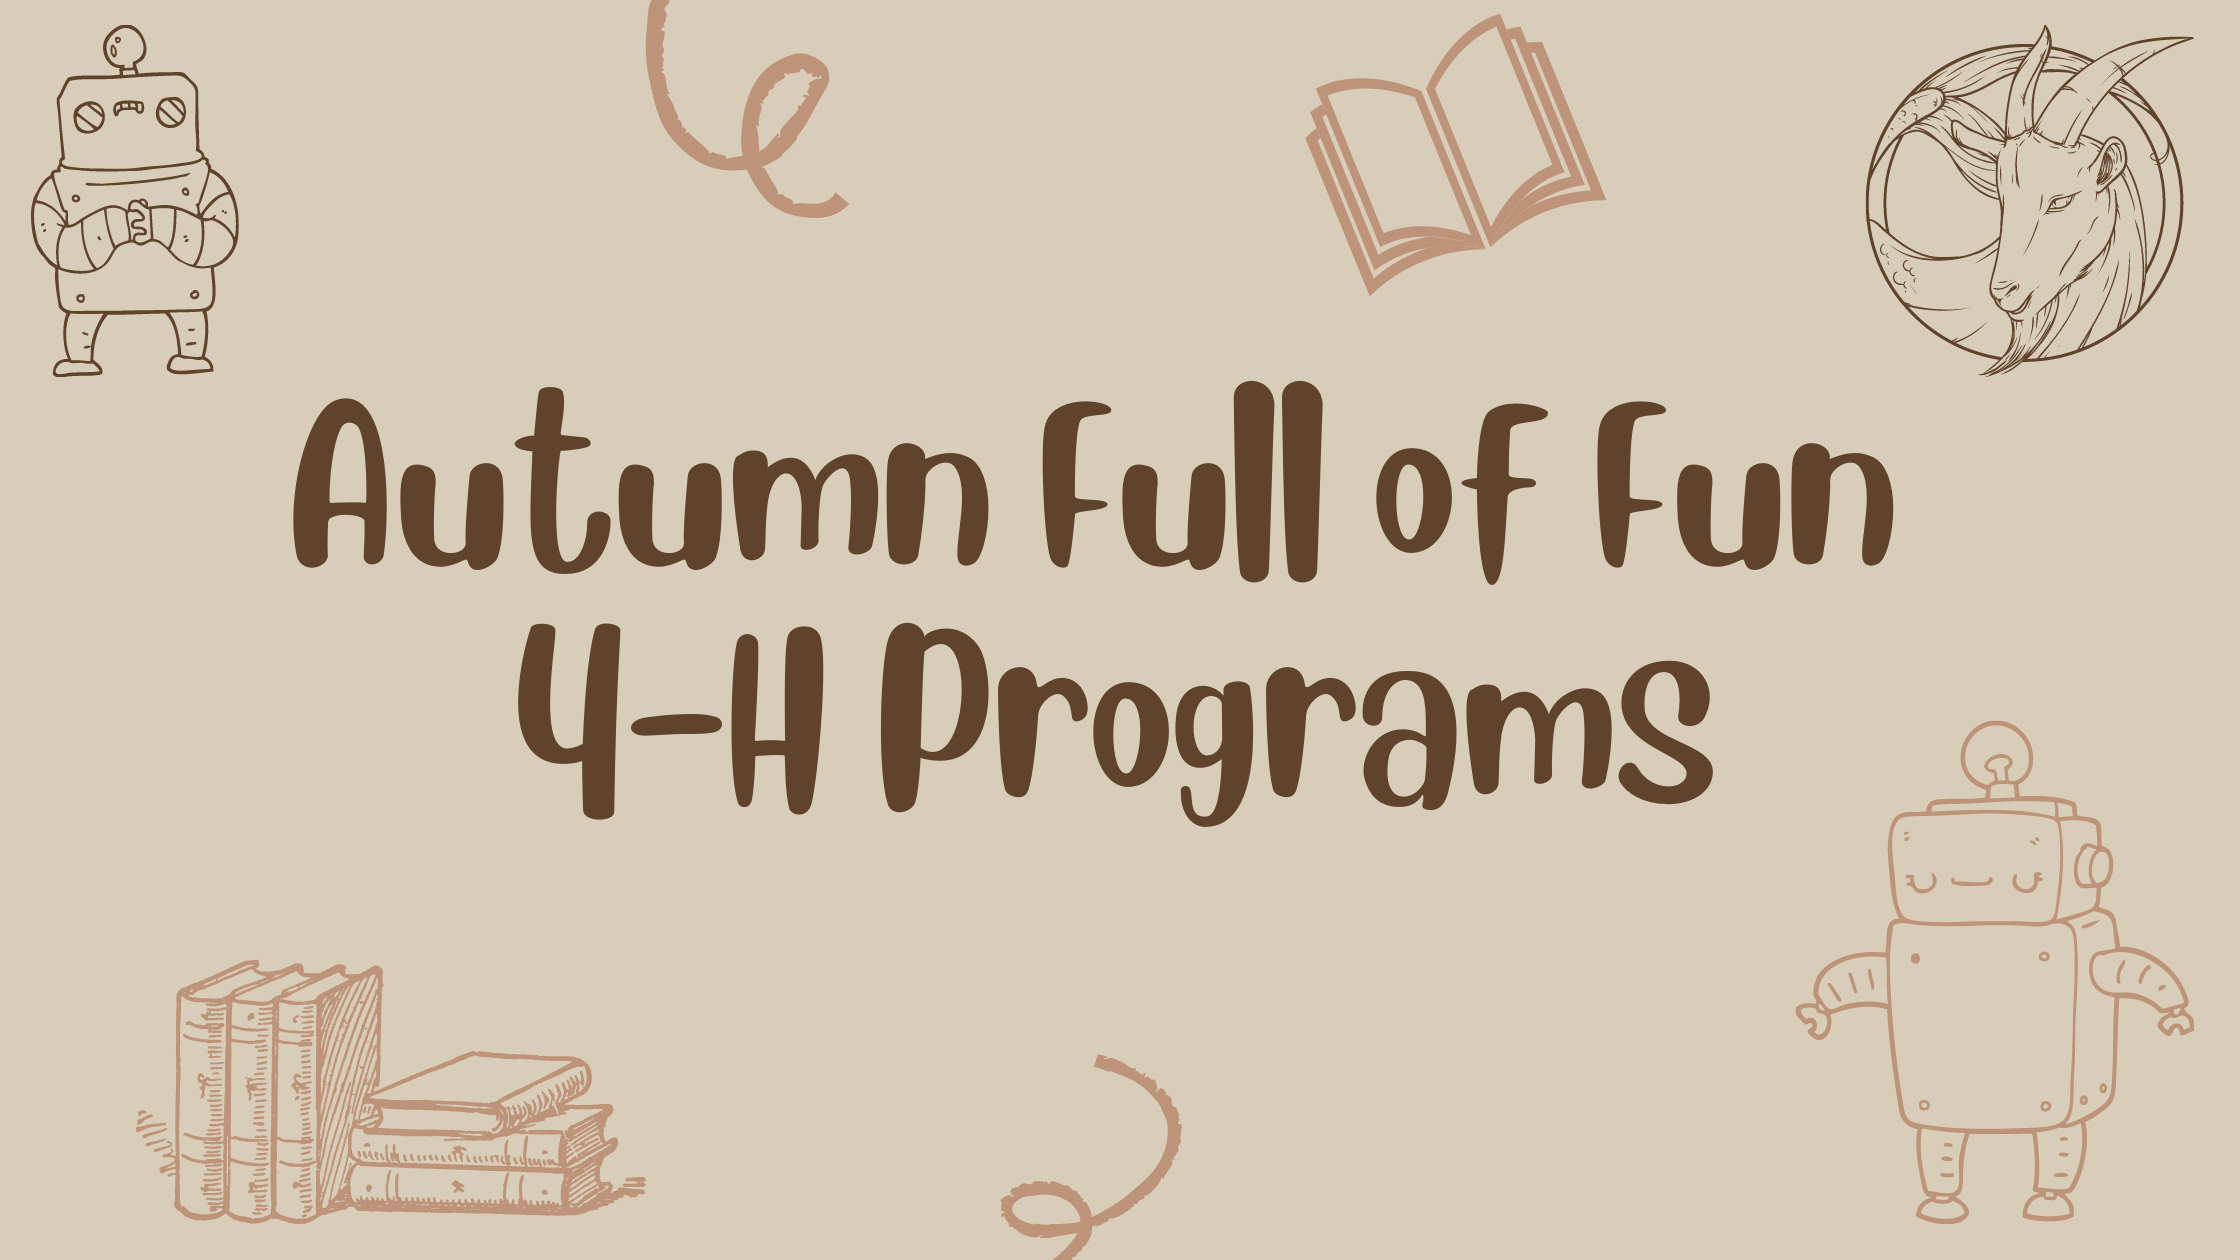 Autumn Full of Fun 4-H Programs